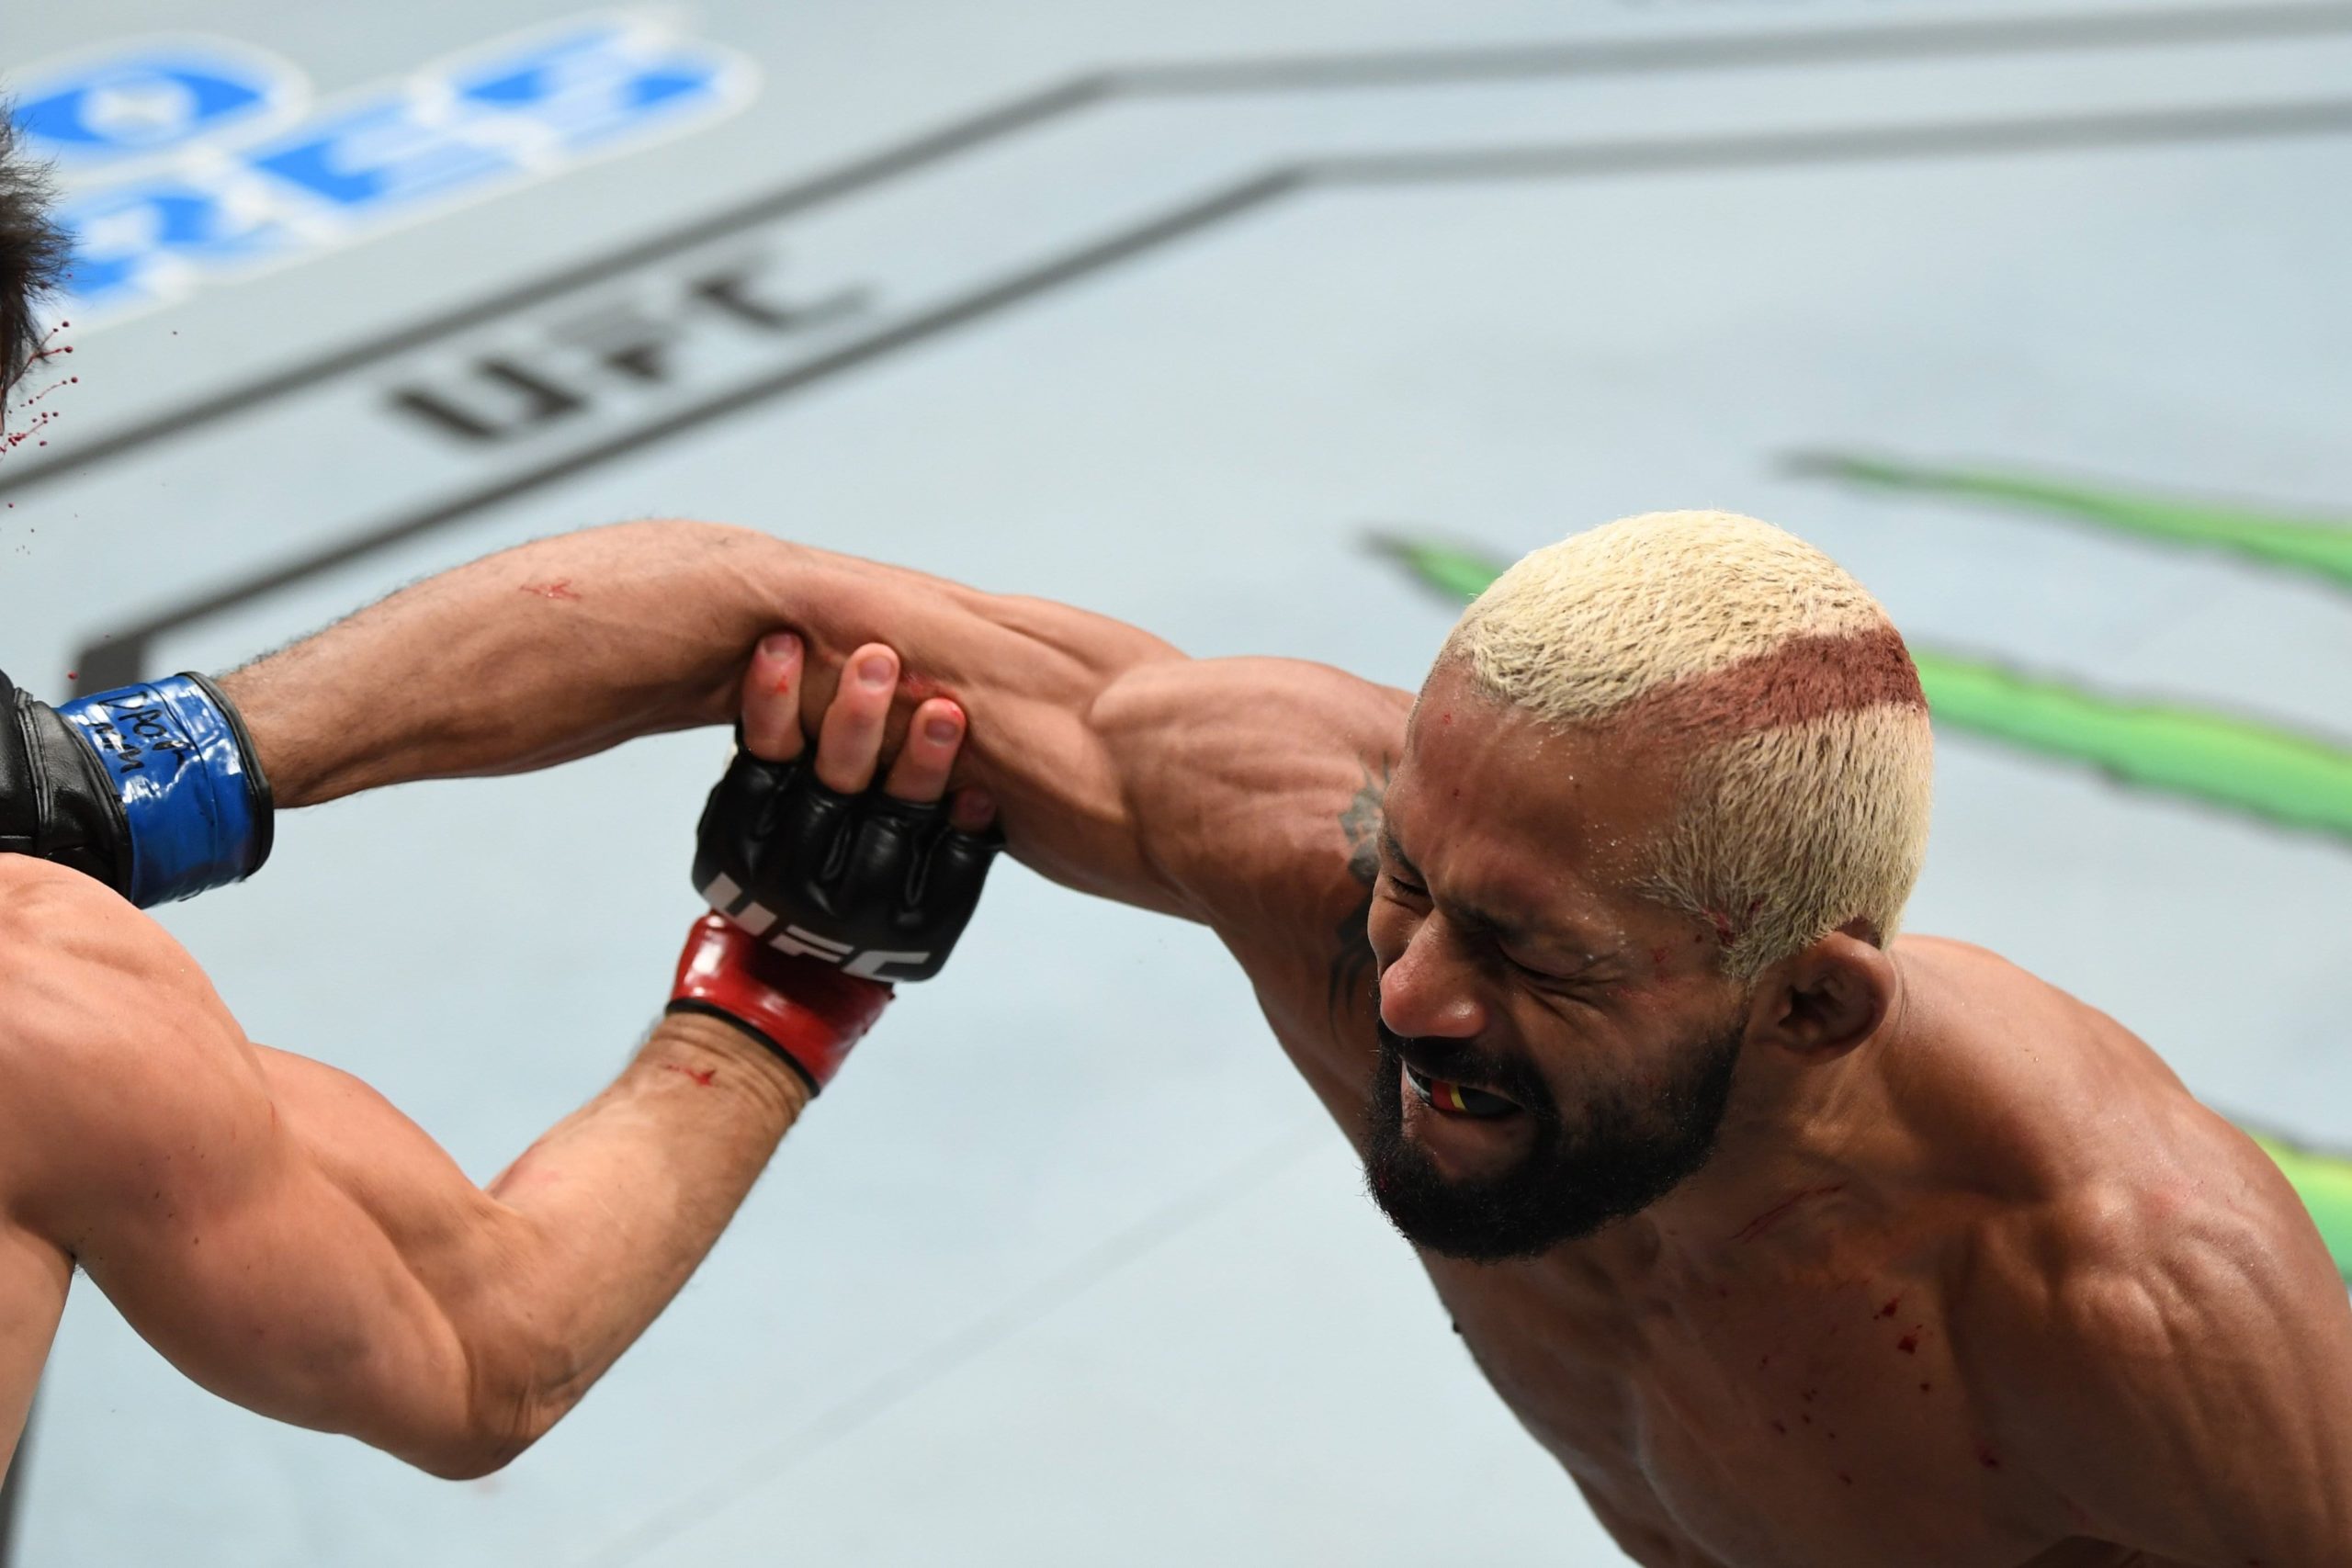 UFC Norfolk - Deiveson Figueiredo lands a punch against Joseph Benavidez